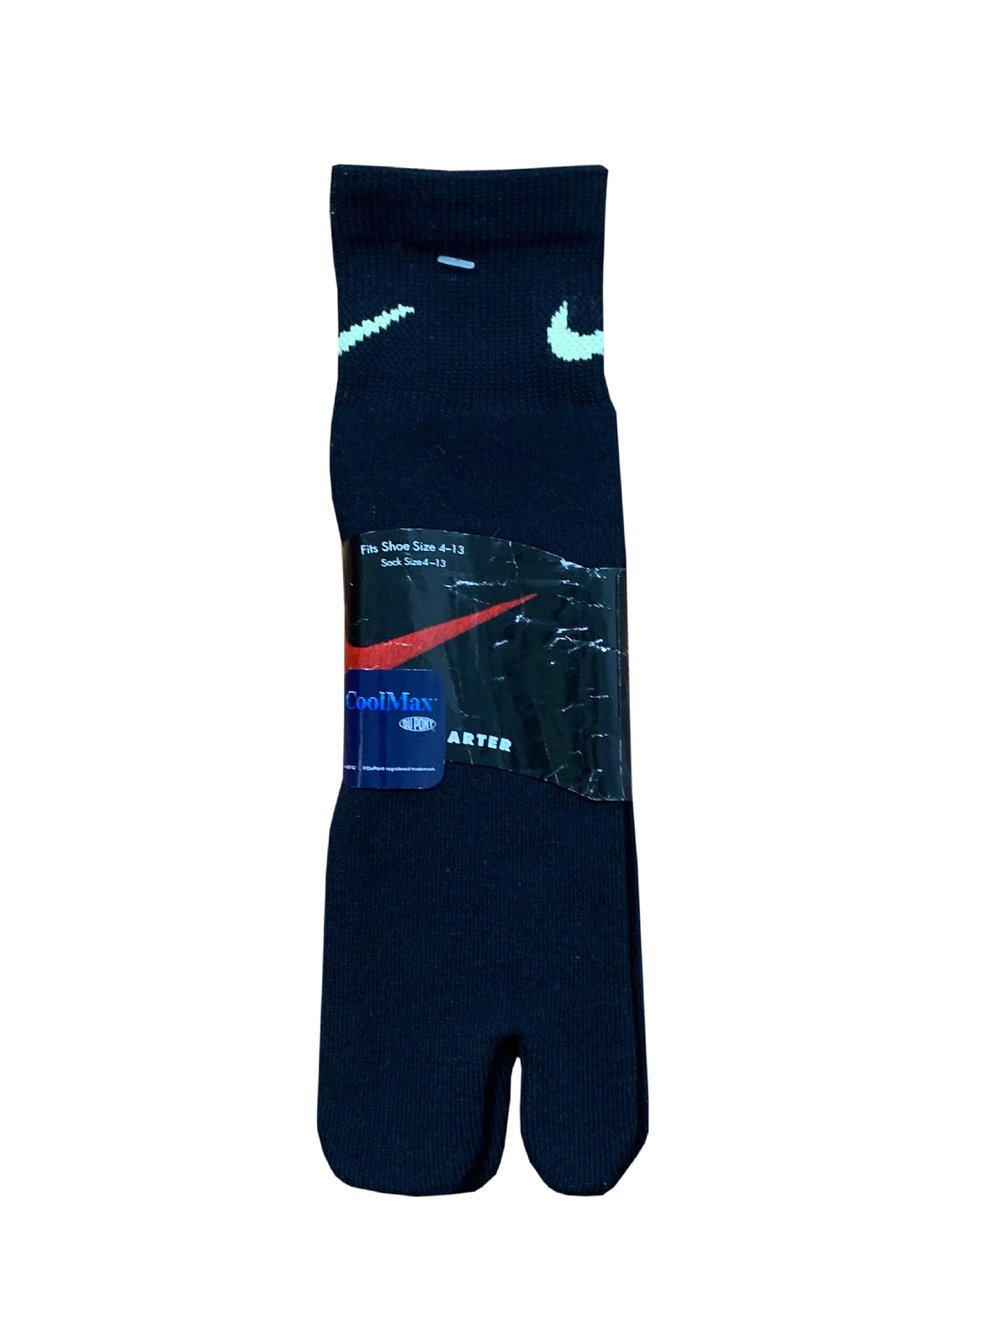 Aeródromo milicia energía Nike Air Rift Single Sock Black (Shoe Size 4-13) NWT — Roots